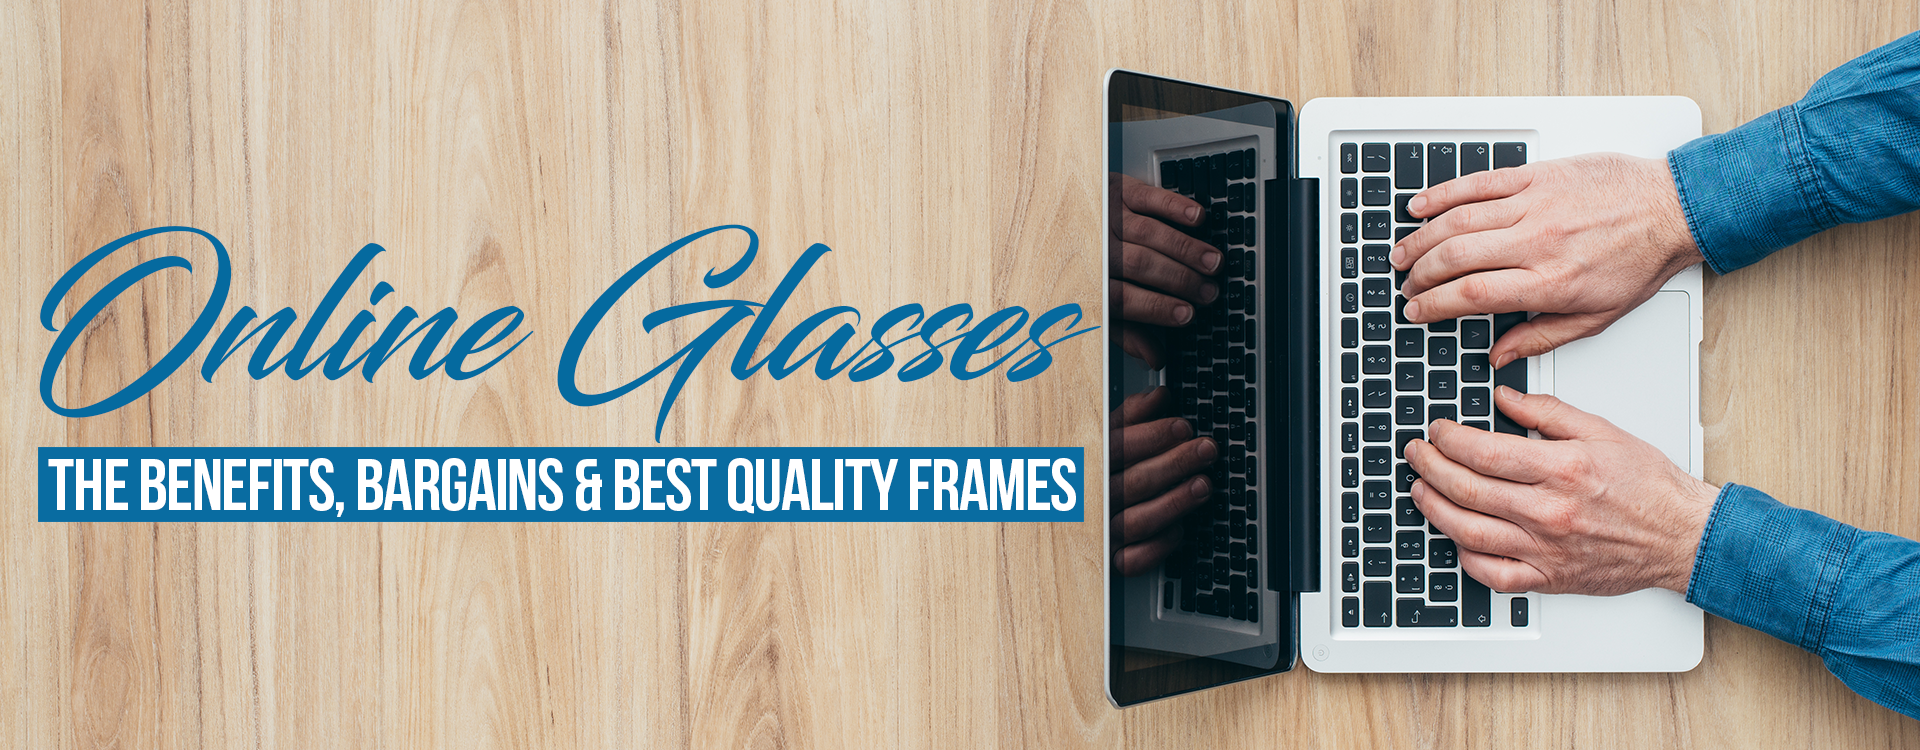 Online Glasses: The Benefits, Bargains & Best Quality Frames